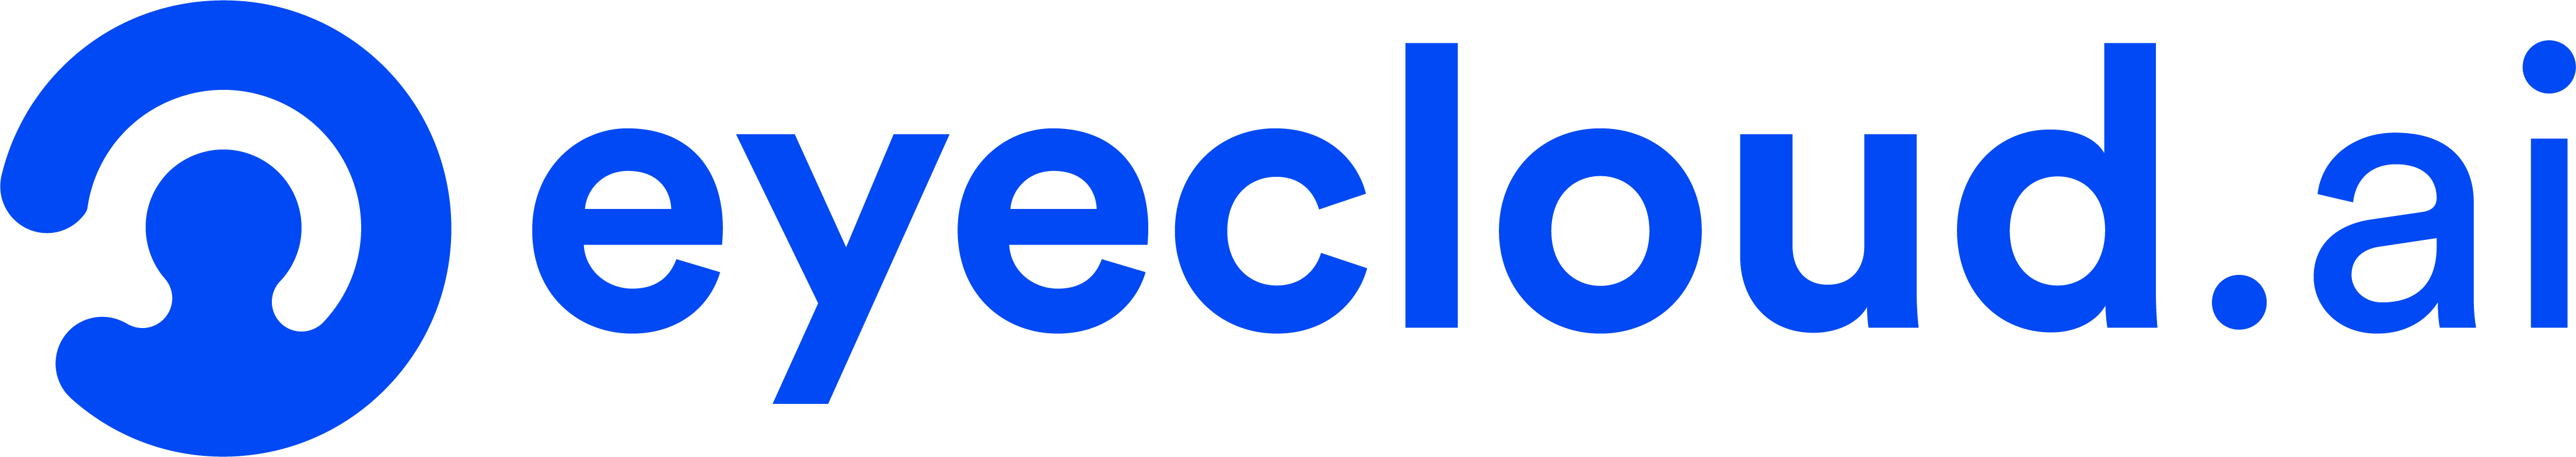 eyecloud-logo-color